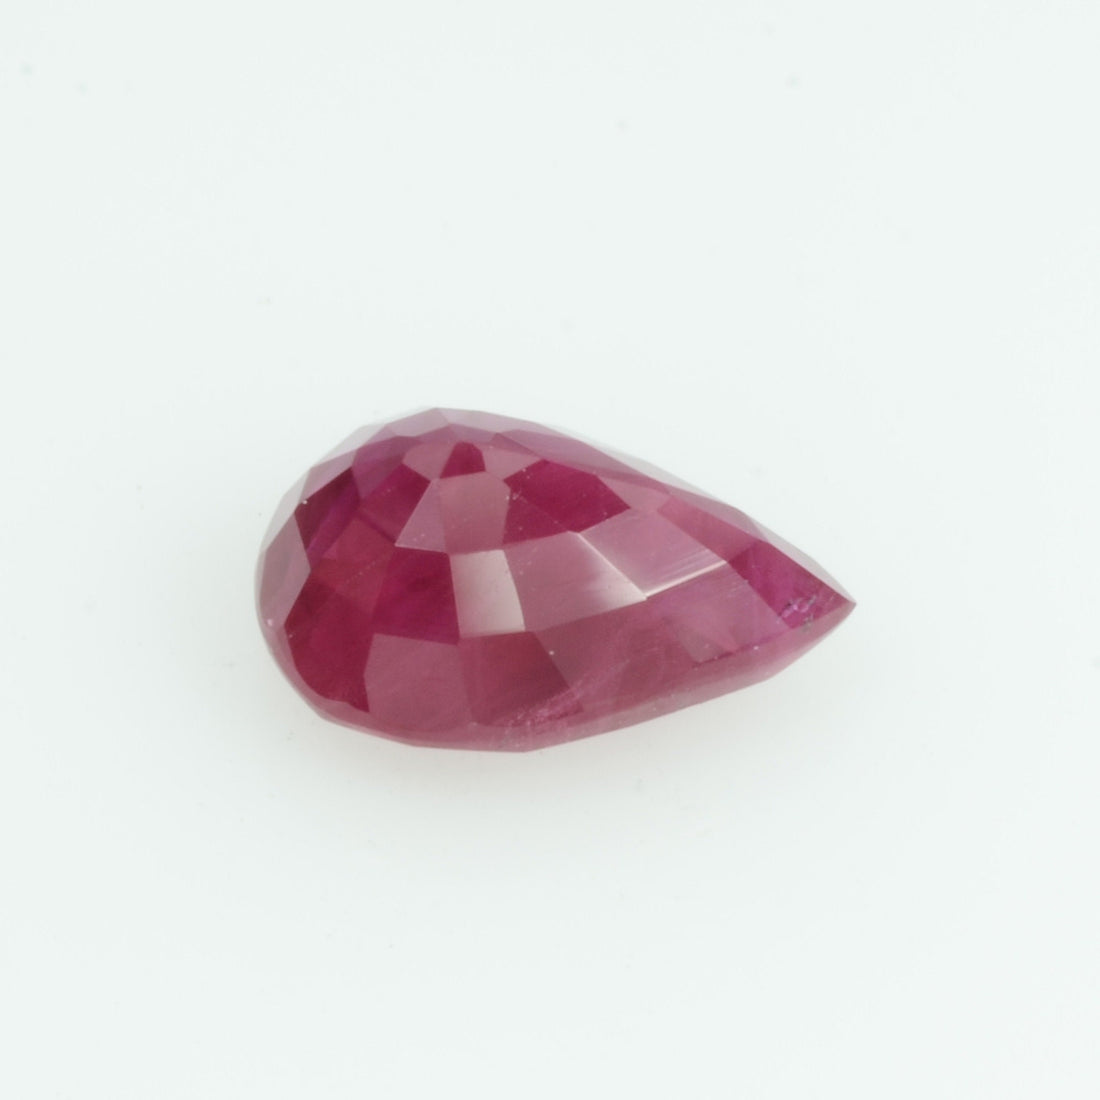 0.91 Cts Natural Burma Ruby Loose Gemstone Pear Cut